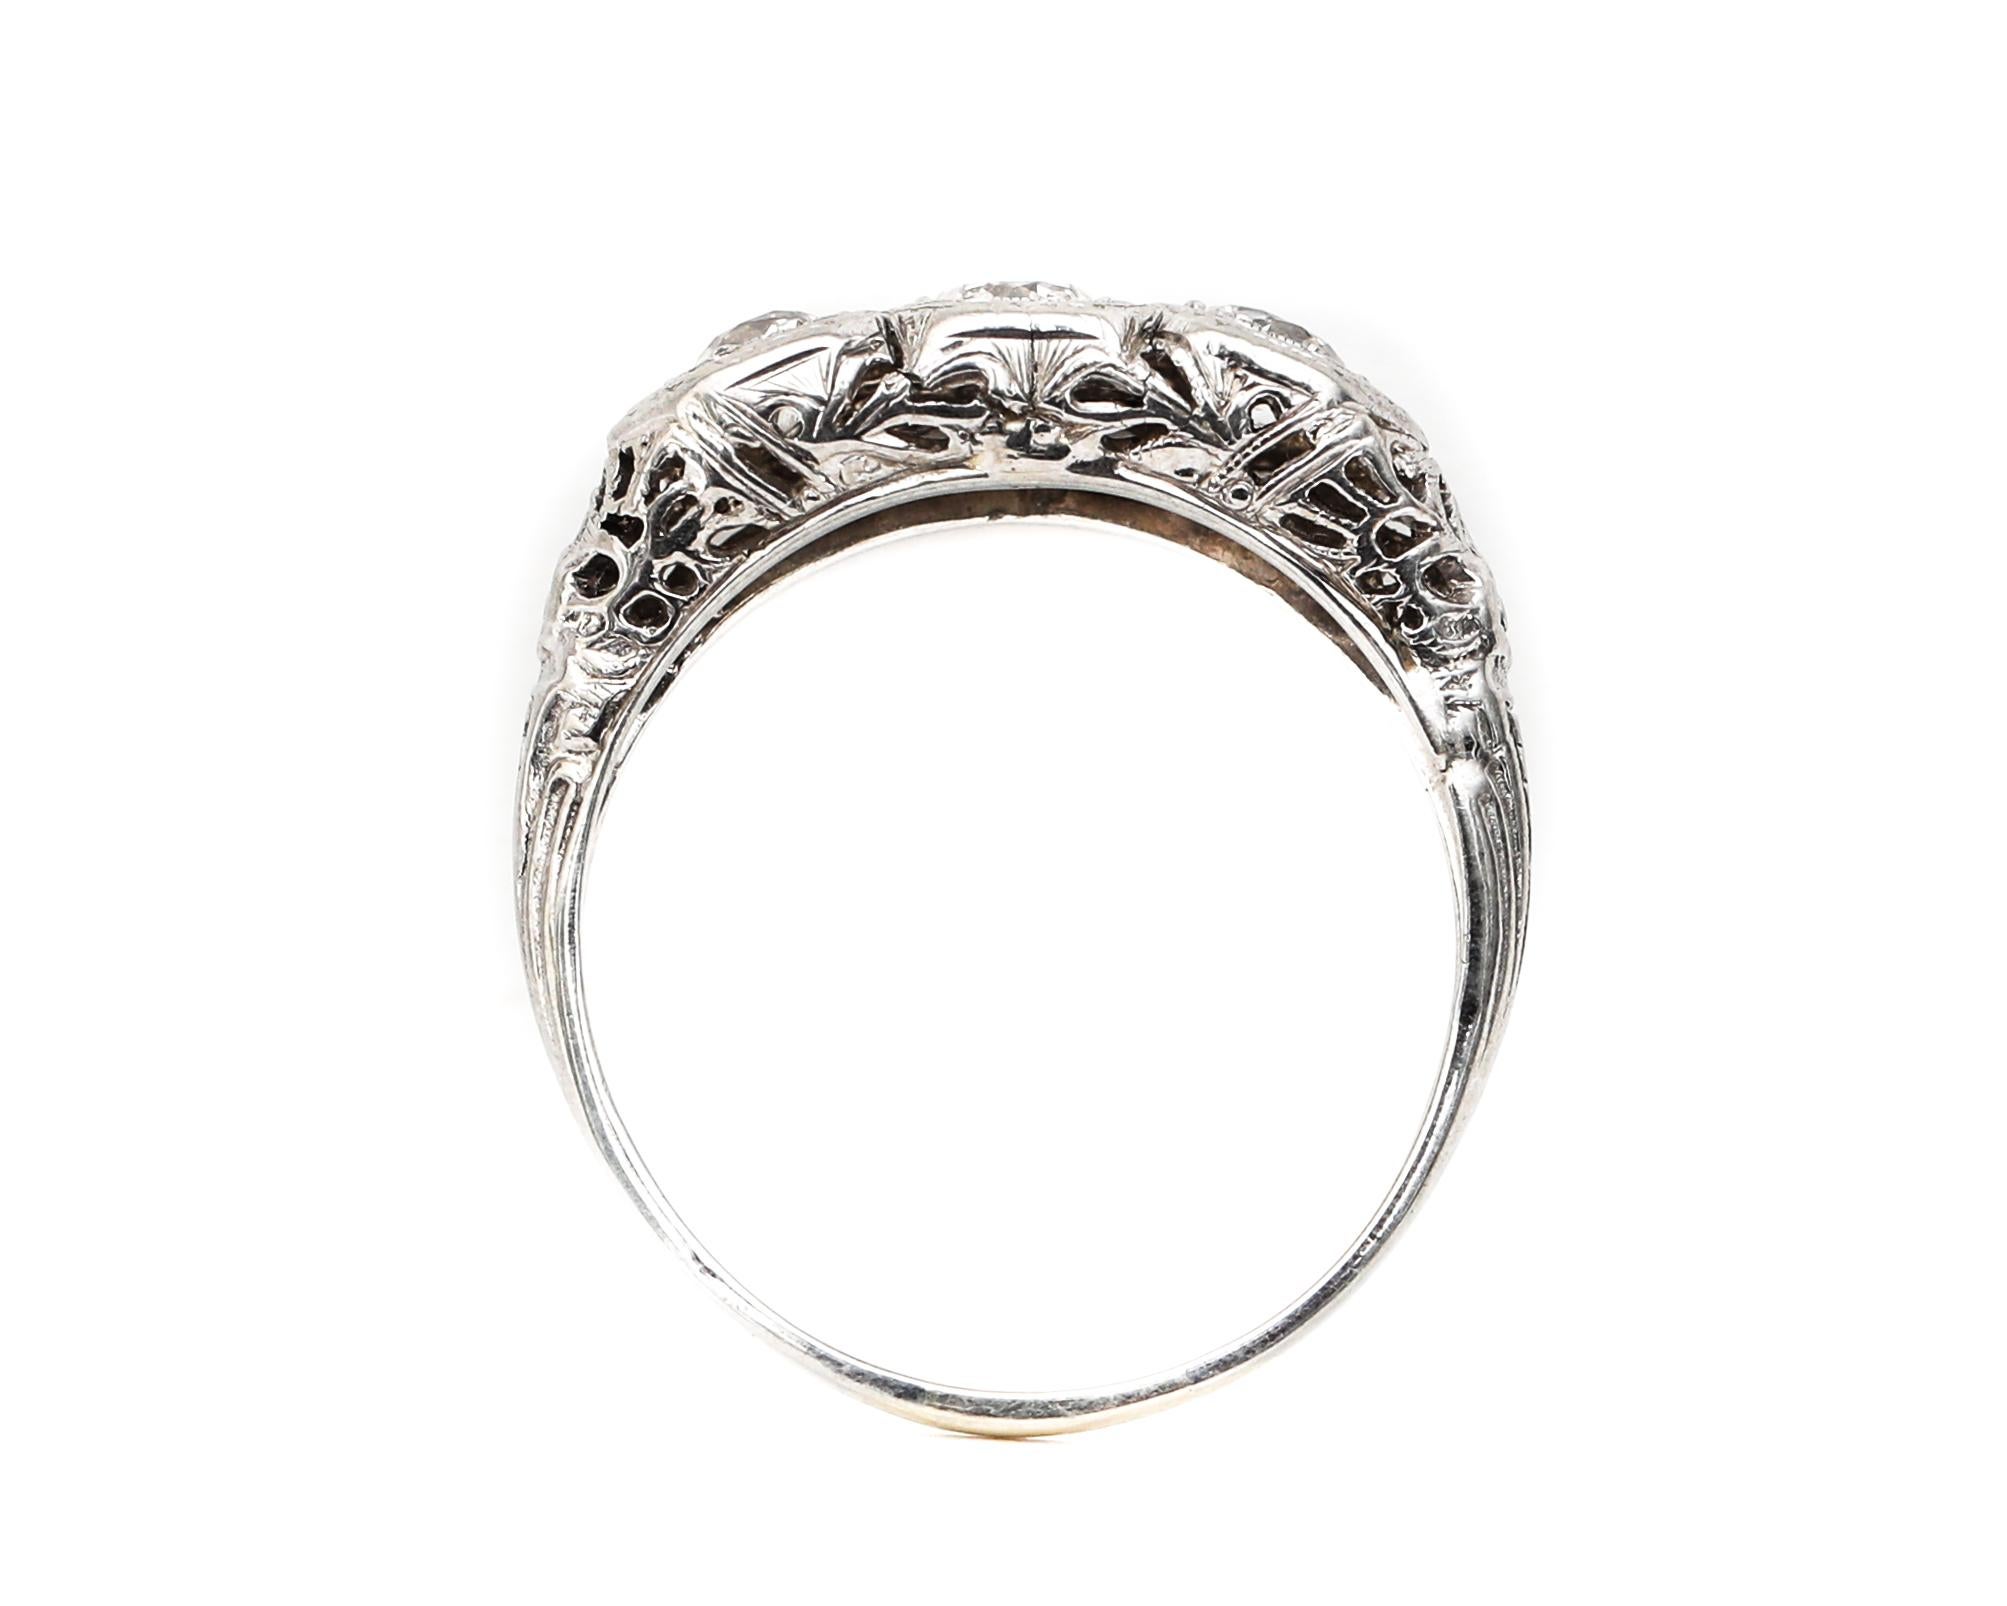 Late Victorian Victorian Antique Three-Diamond Filigree Low Profile Vintage Engagement Ring